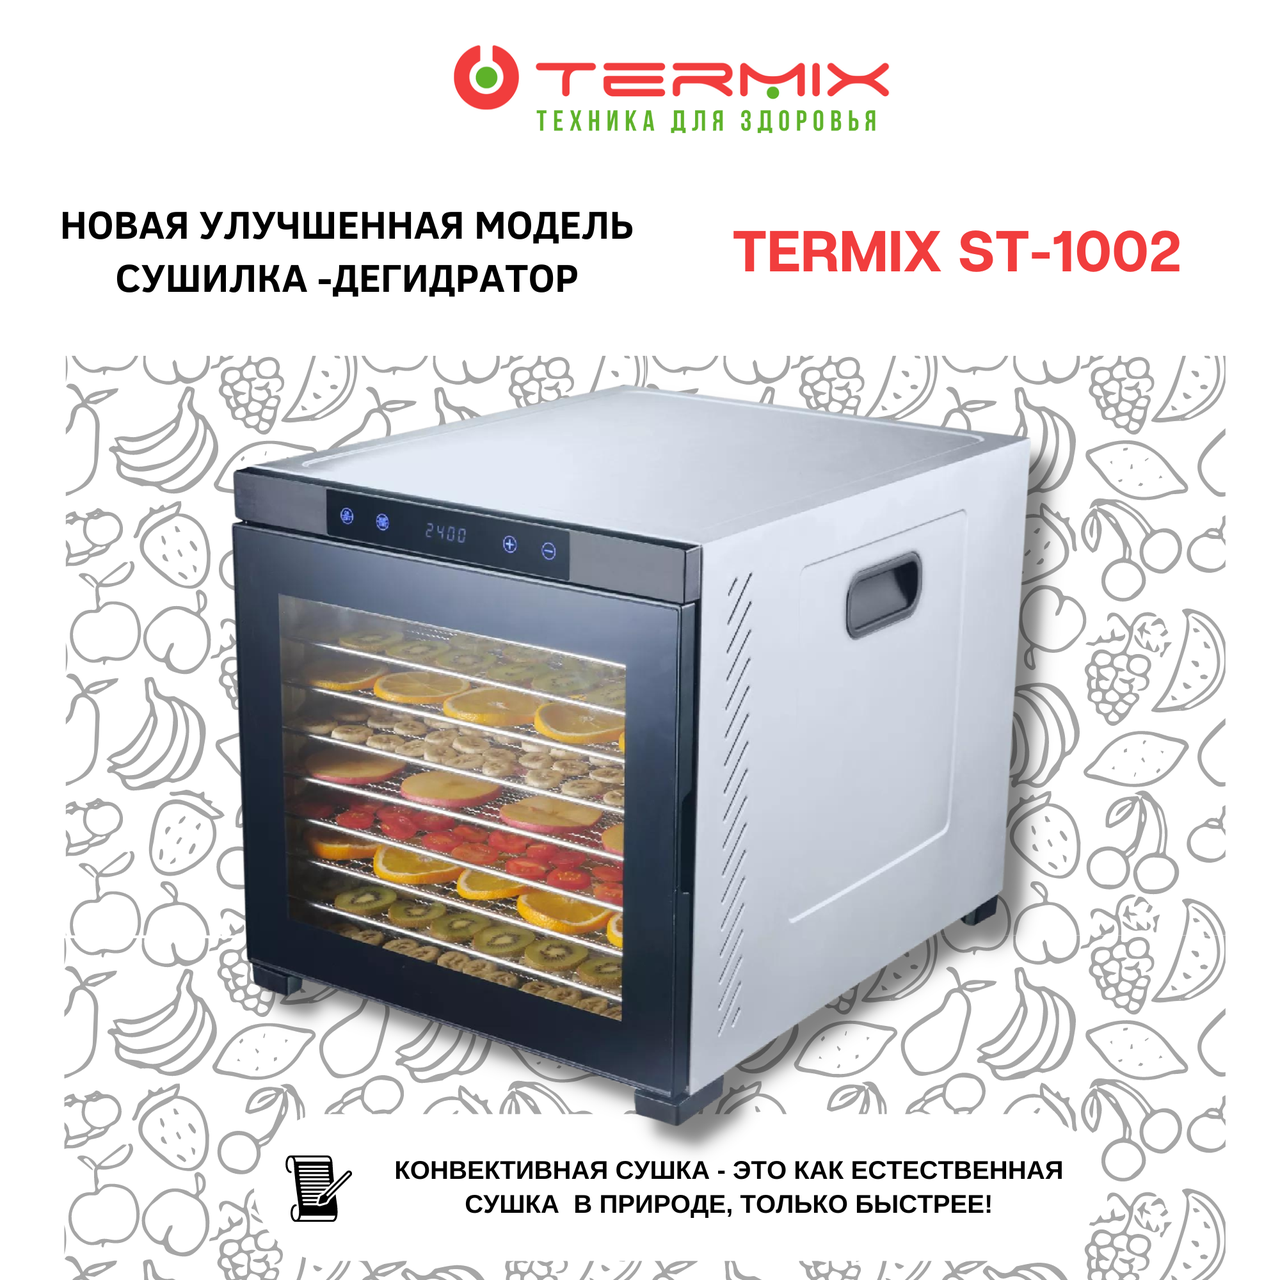 Сушилка-дегидратор TERMIX ST-1002  Professional Series